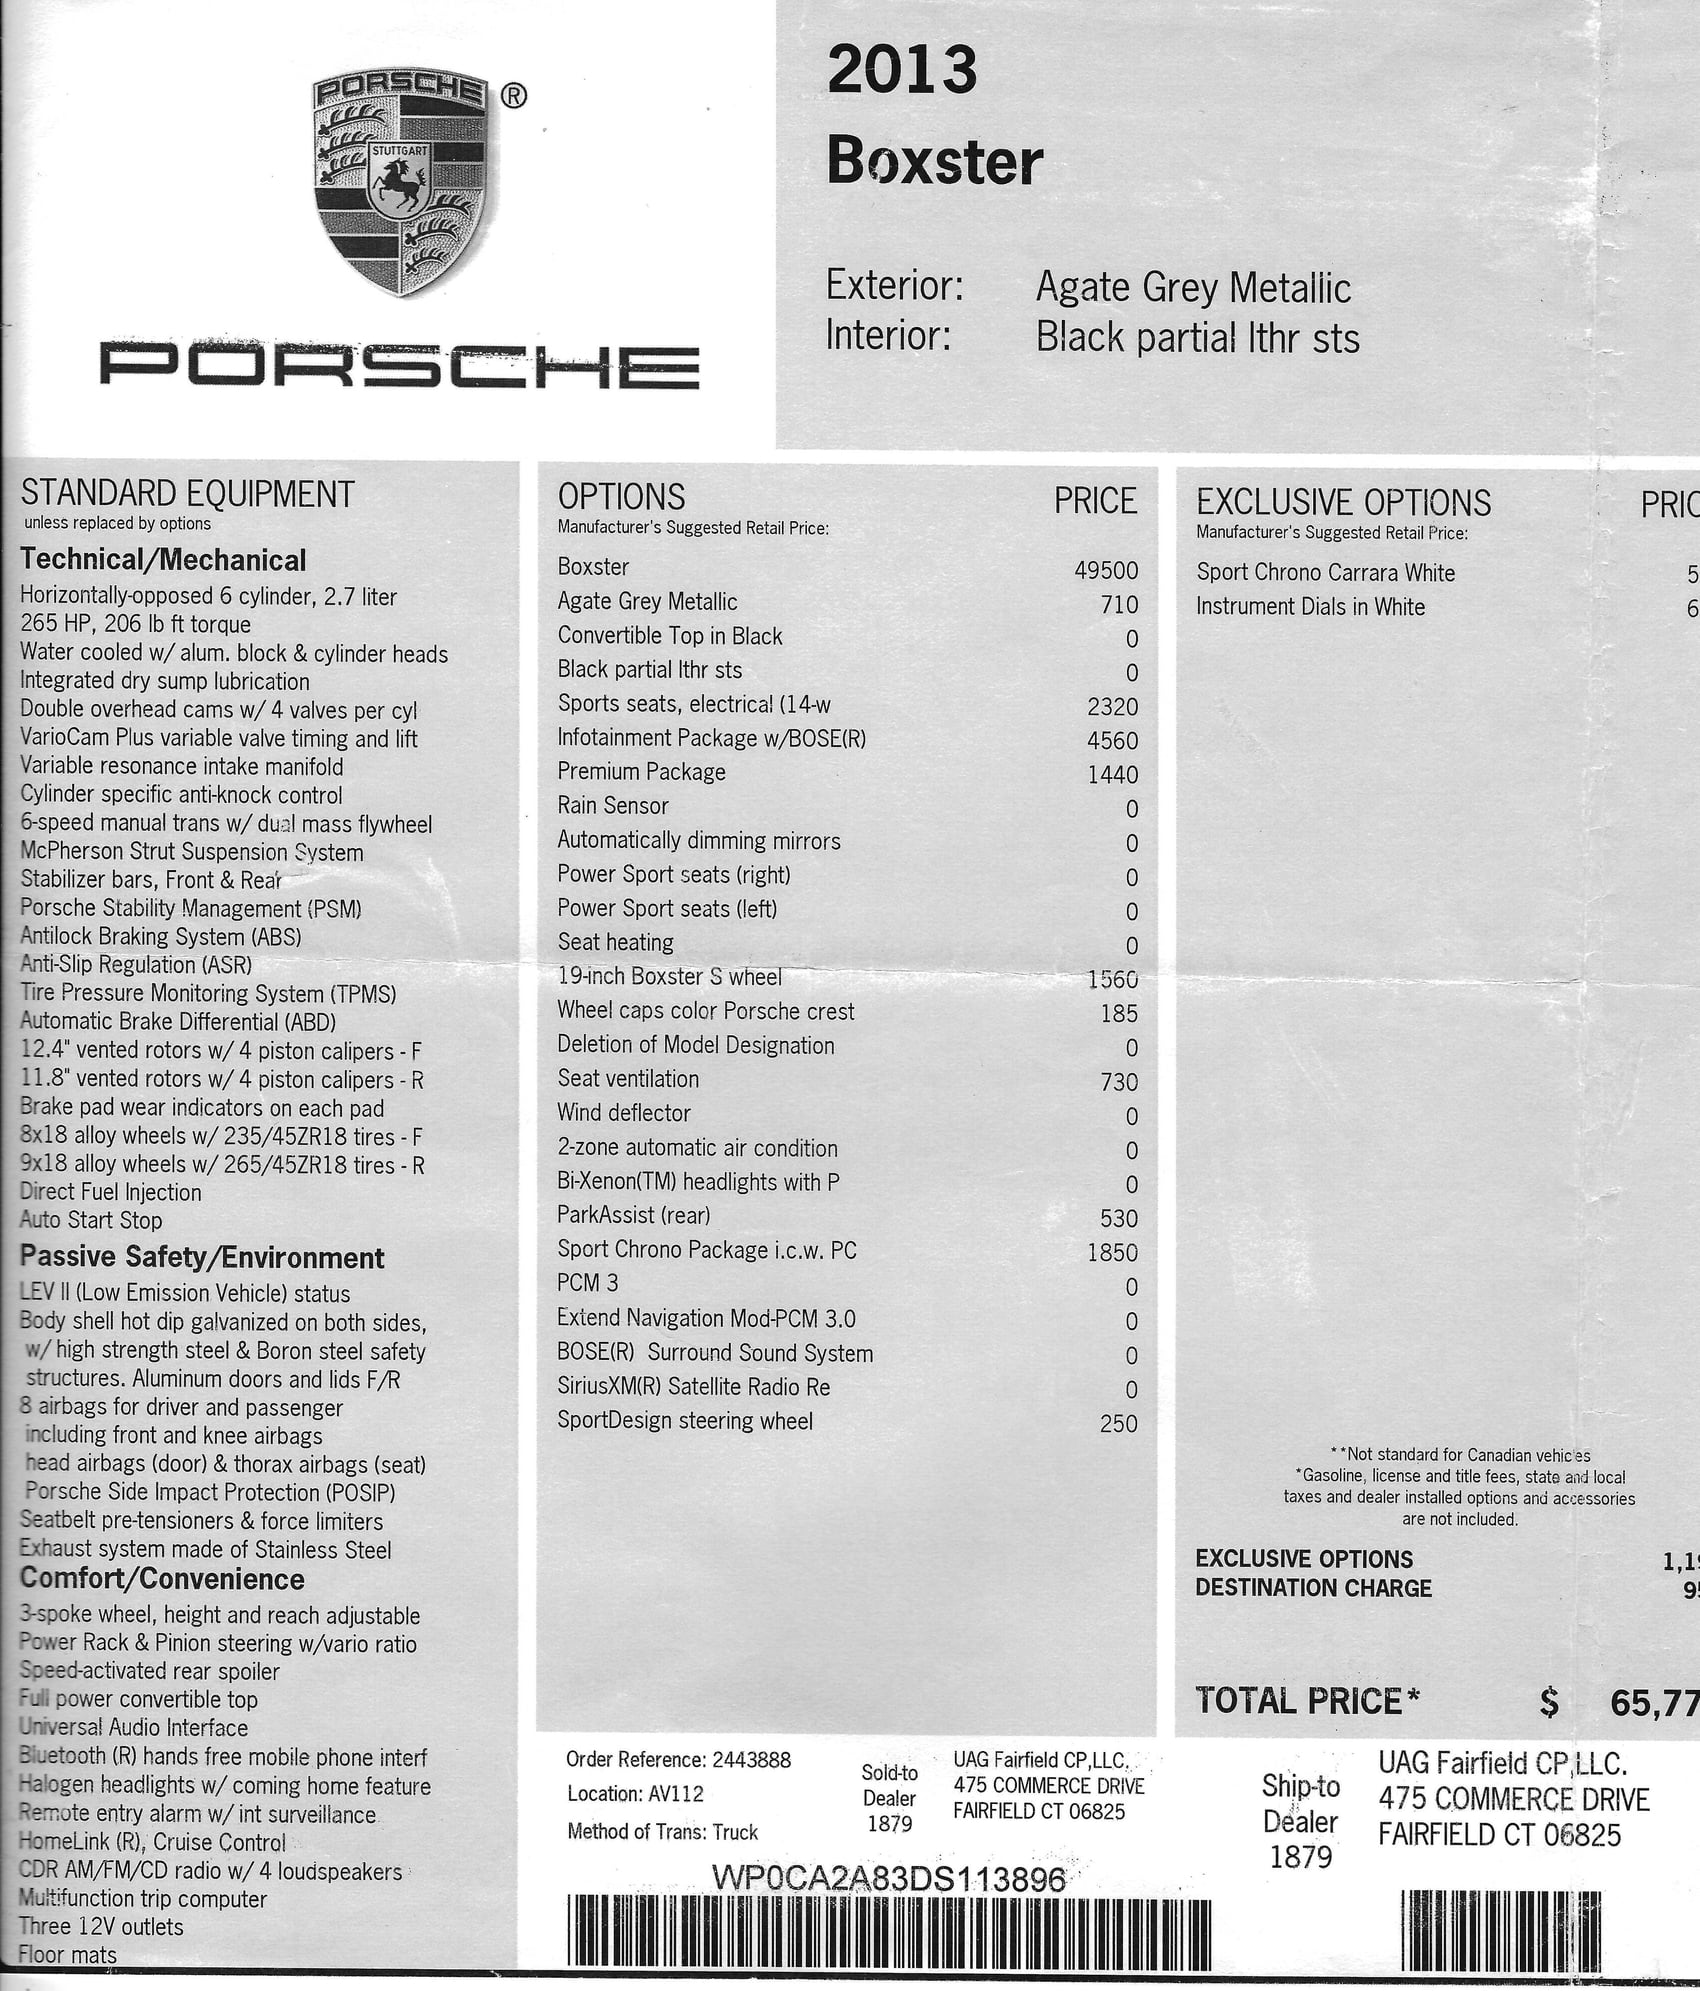 2013 Porsche Boxster - 2013 Porsche Boxster (6-speed manual, Sport Chrono, PSE, 14-way seats, Premium Pkg) - Used - VIN WPOCA2A83DS113896 - 61,500 Miles - 6 cyl - 2WD - Manual - Convertible - Gray - Quaker Hill Ct, CT 06375, United States